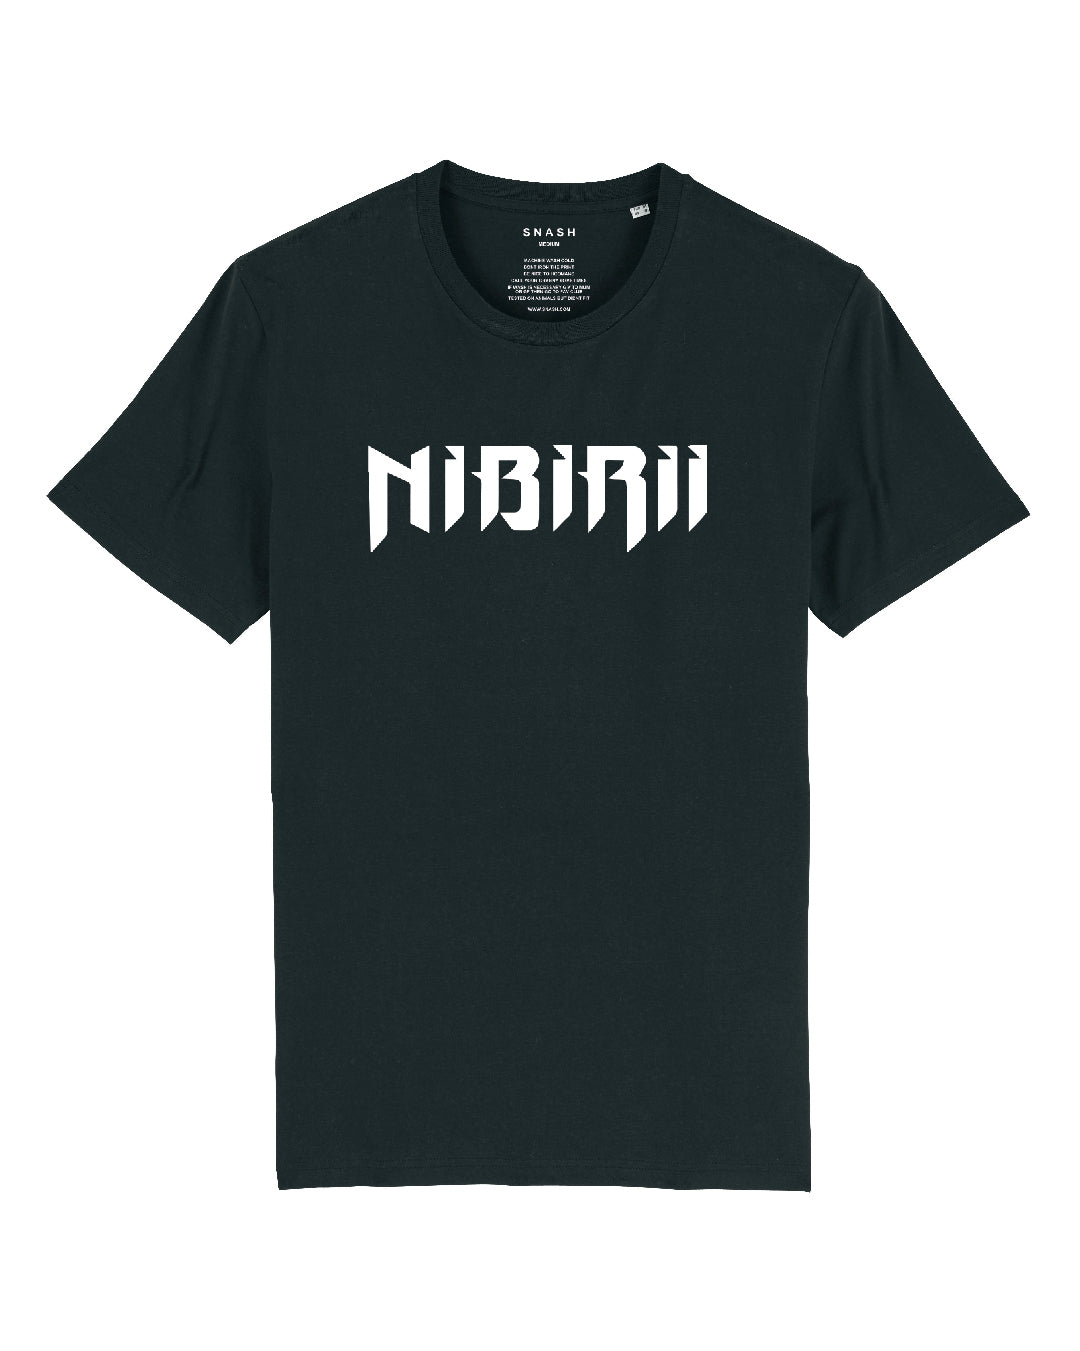 Nibirii - Signature T-Shirt V2